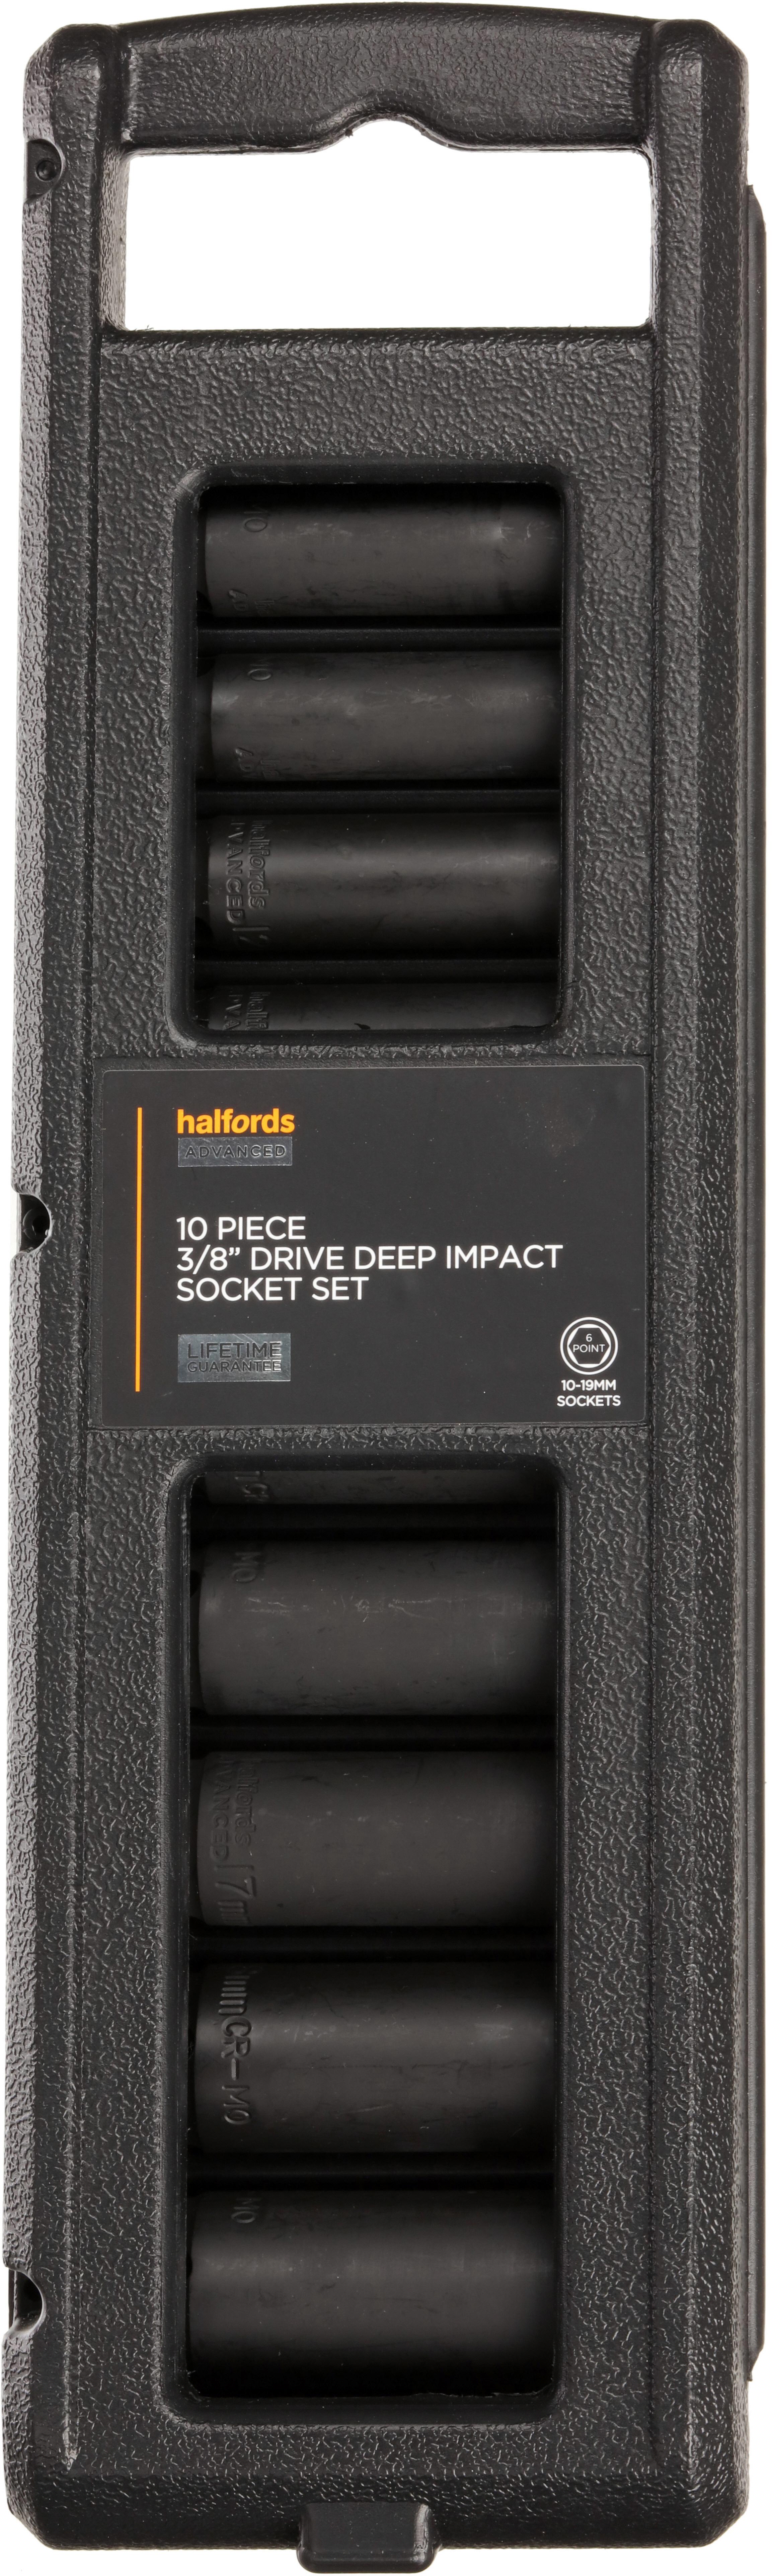 Halfords Advanced 10 Piece 3/8” Drive Impact Deep Socket Rail Set  Halfords UK